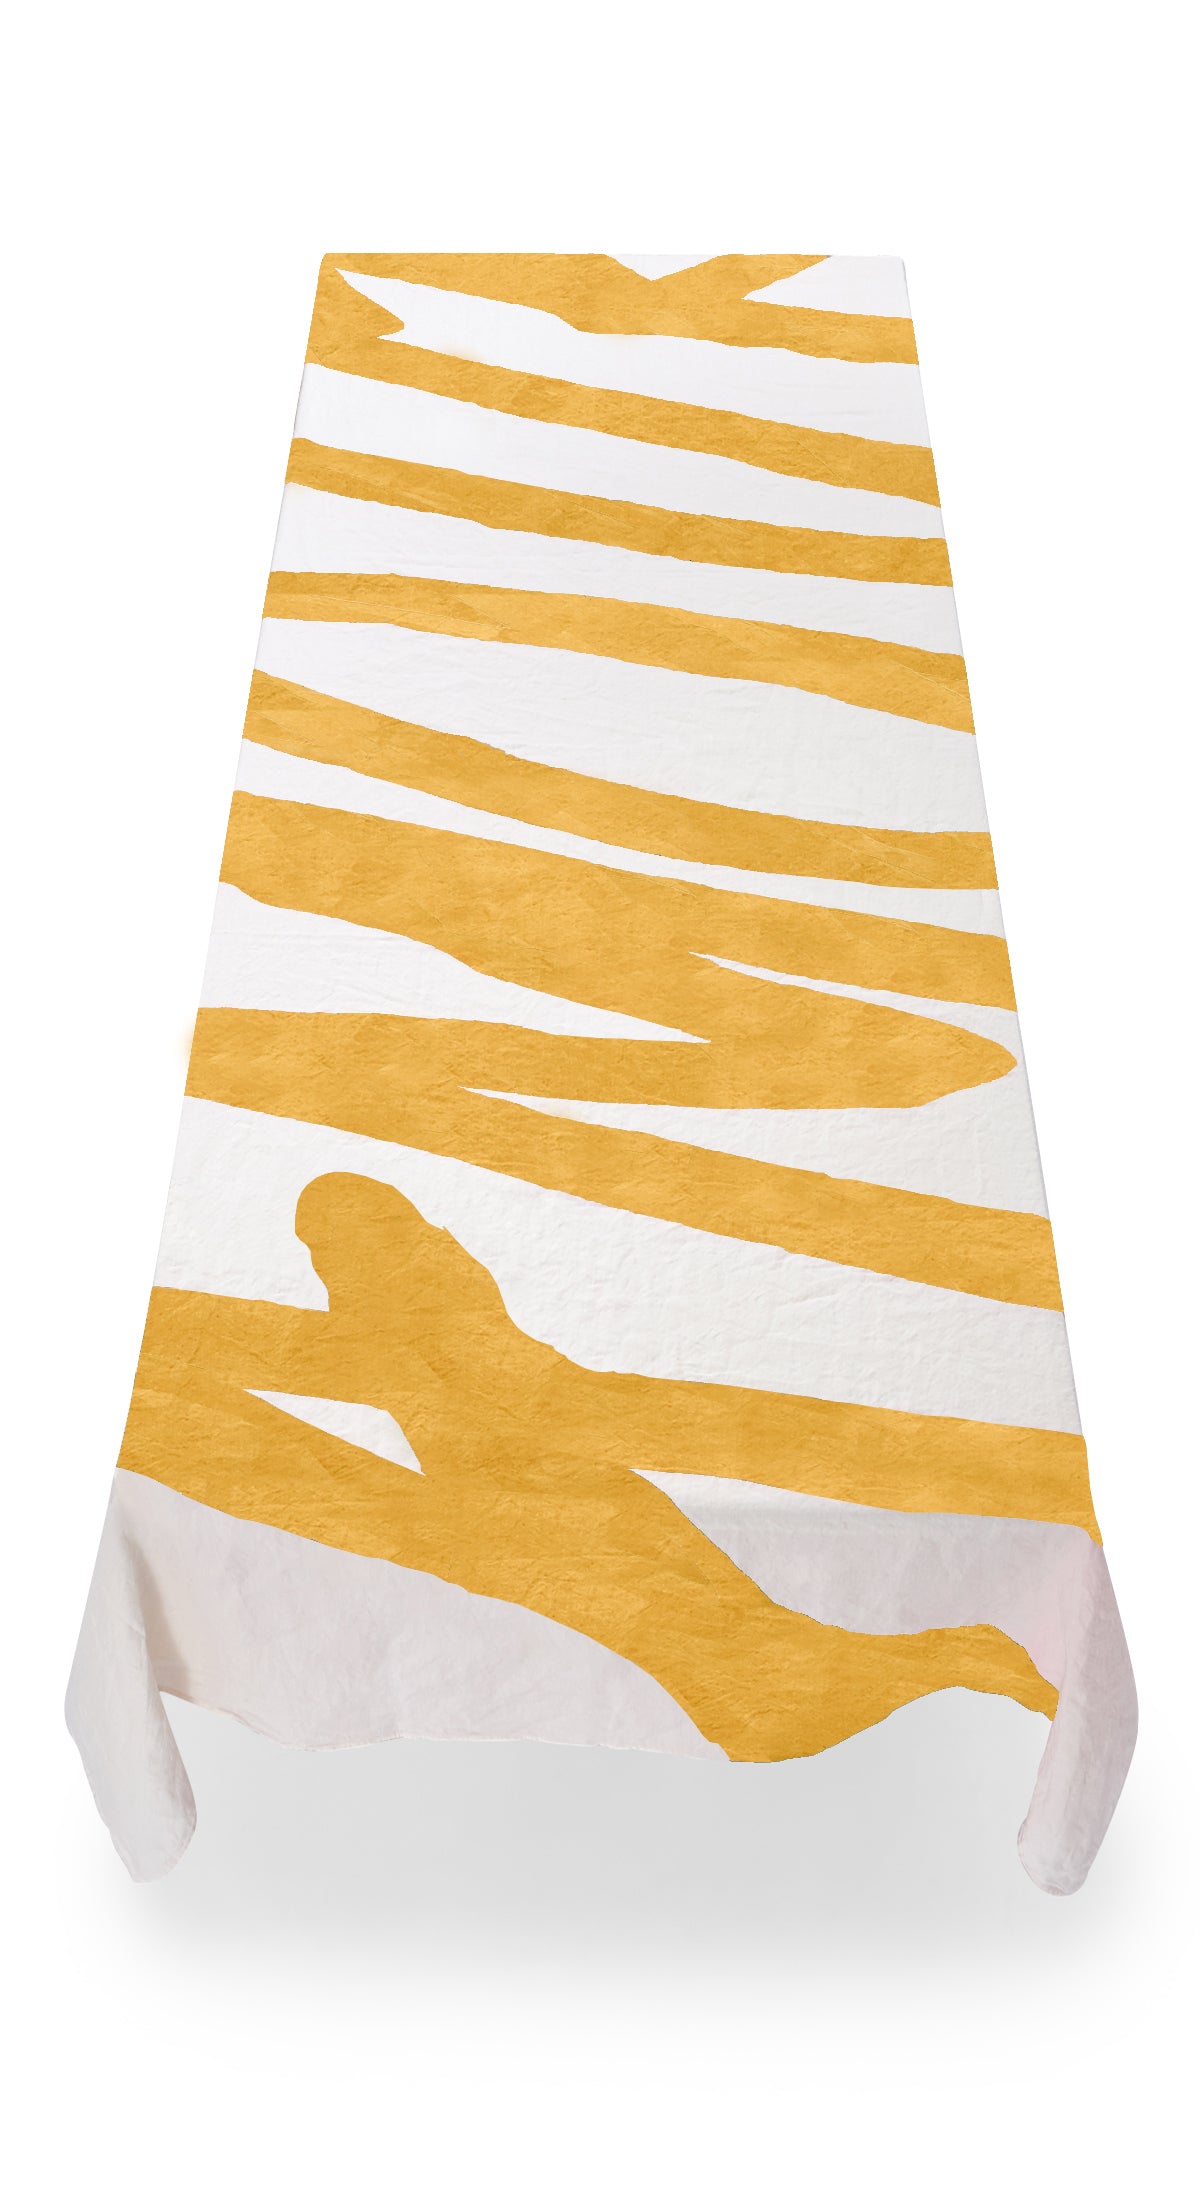 Bespoke Word Linen Tablecloth in Lemon Yellow